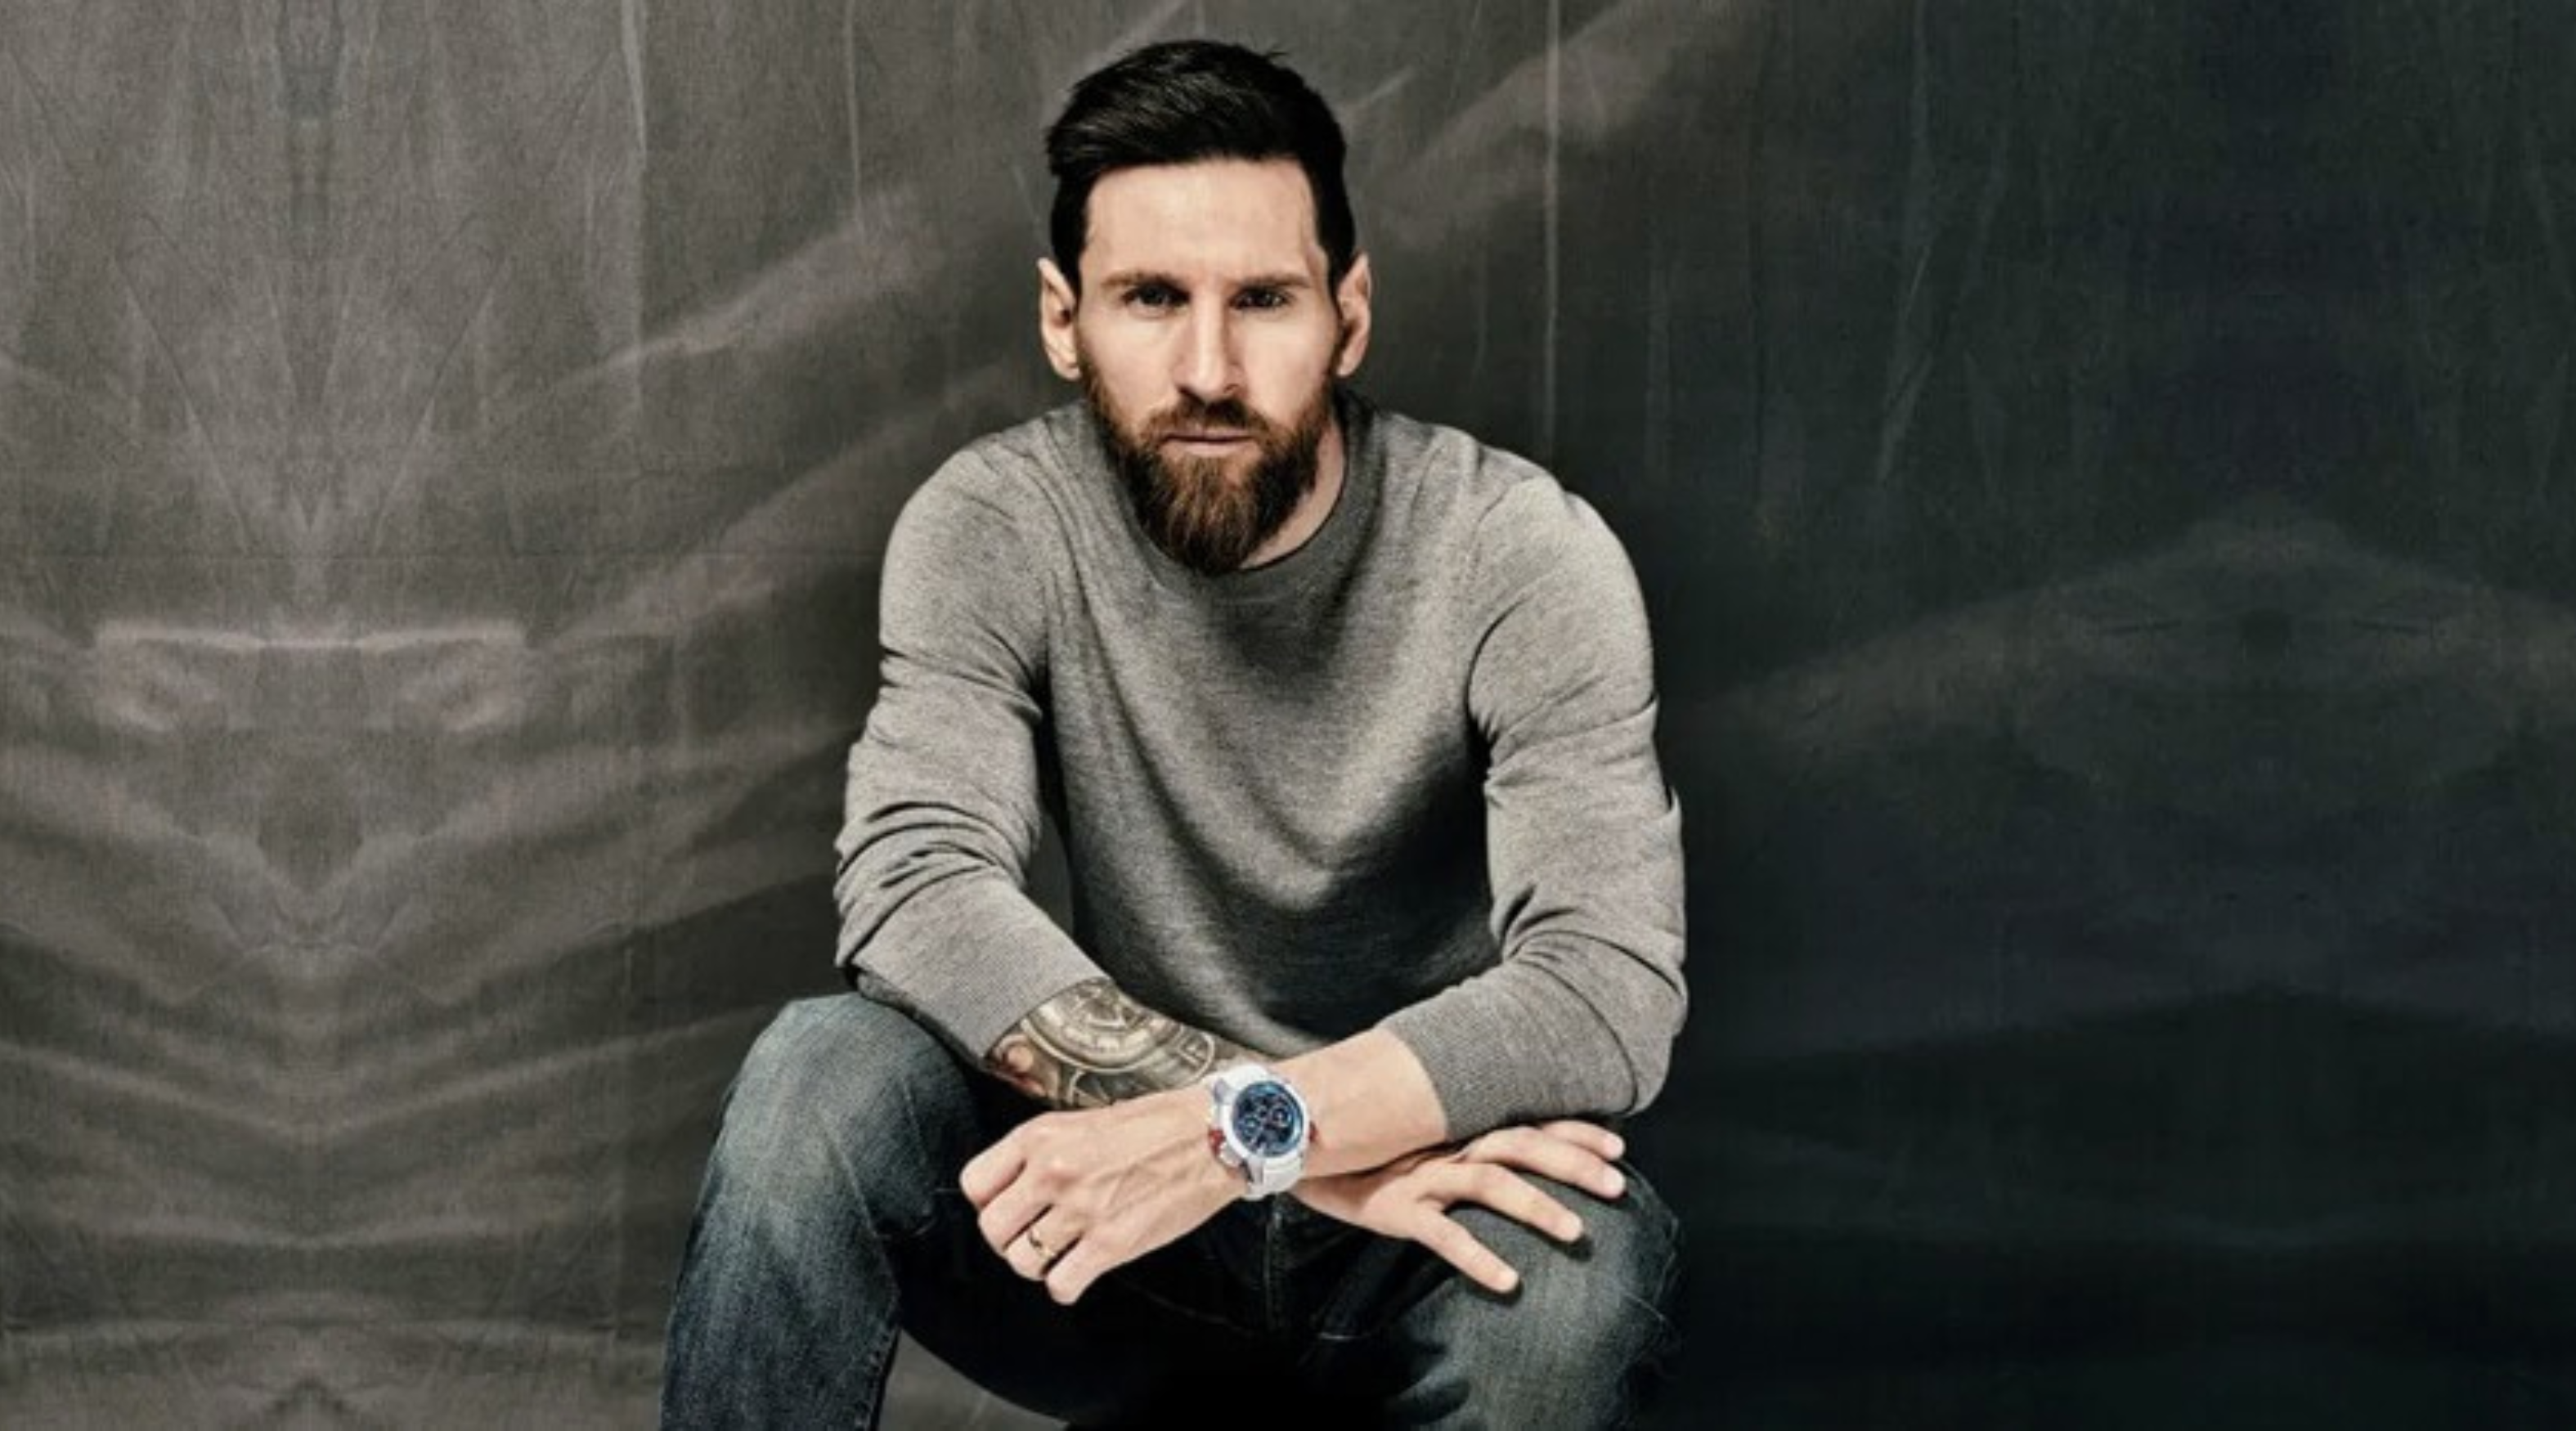 Article: 莱昂内尔·梅西 (Lionel Messi) 和世界杯冠军腕表系列